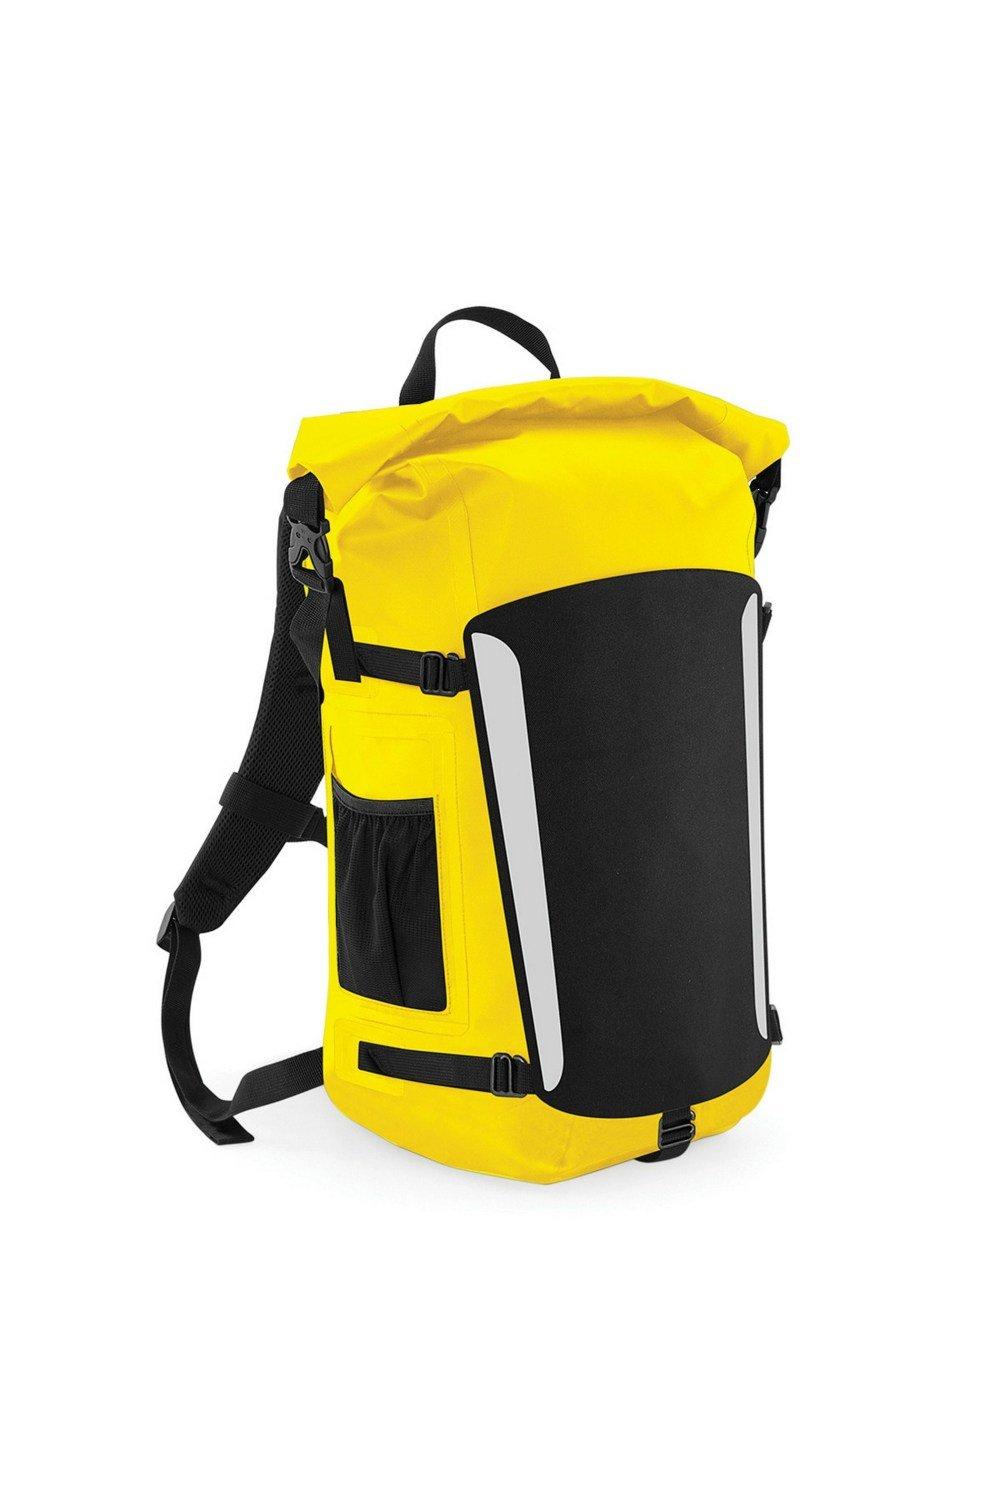 Водонепроницаемый рюкзак Submerge объемом 25 литров Quadra, желтый